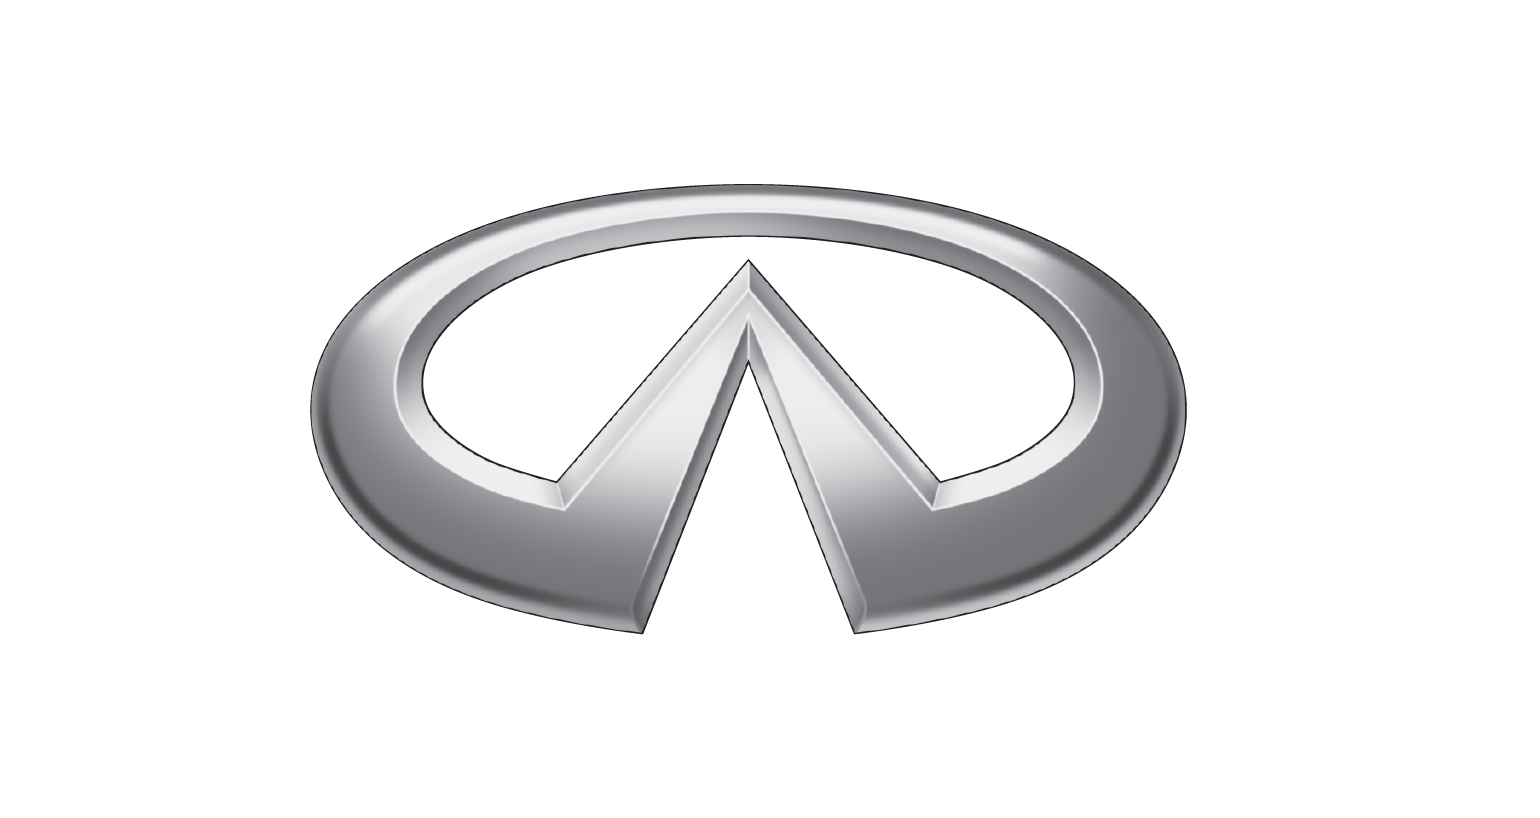 Infiniti Car Logo